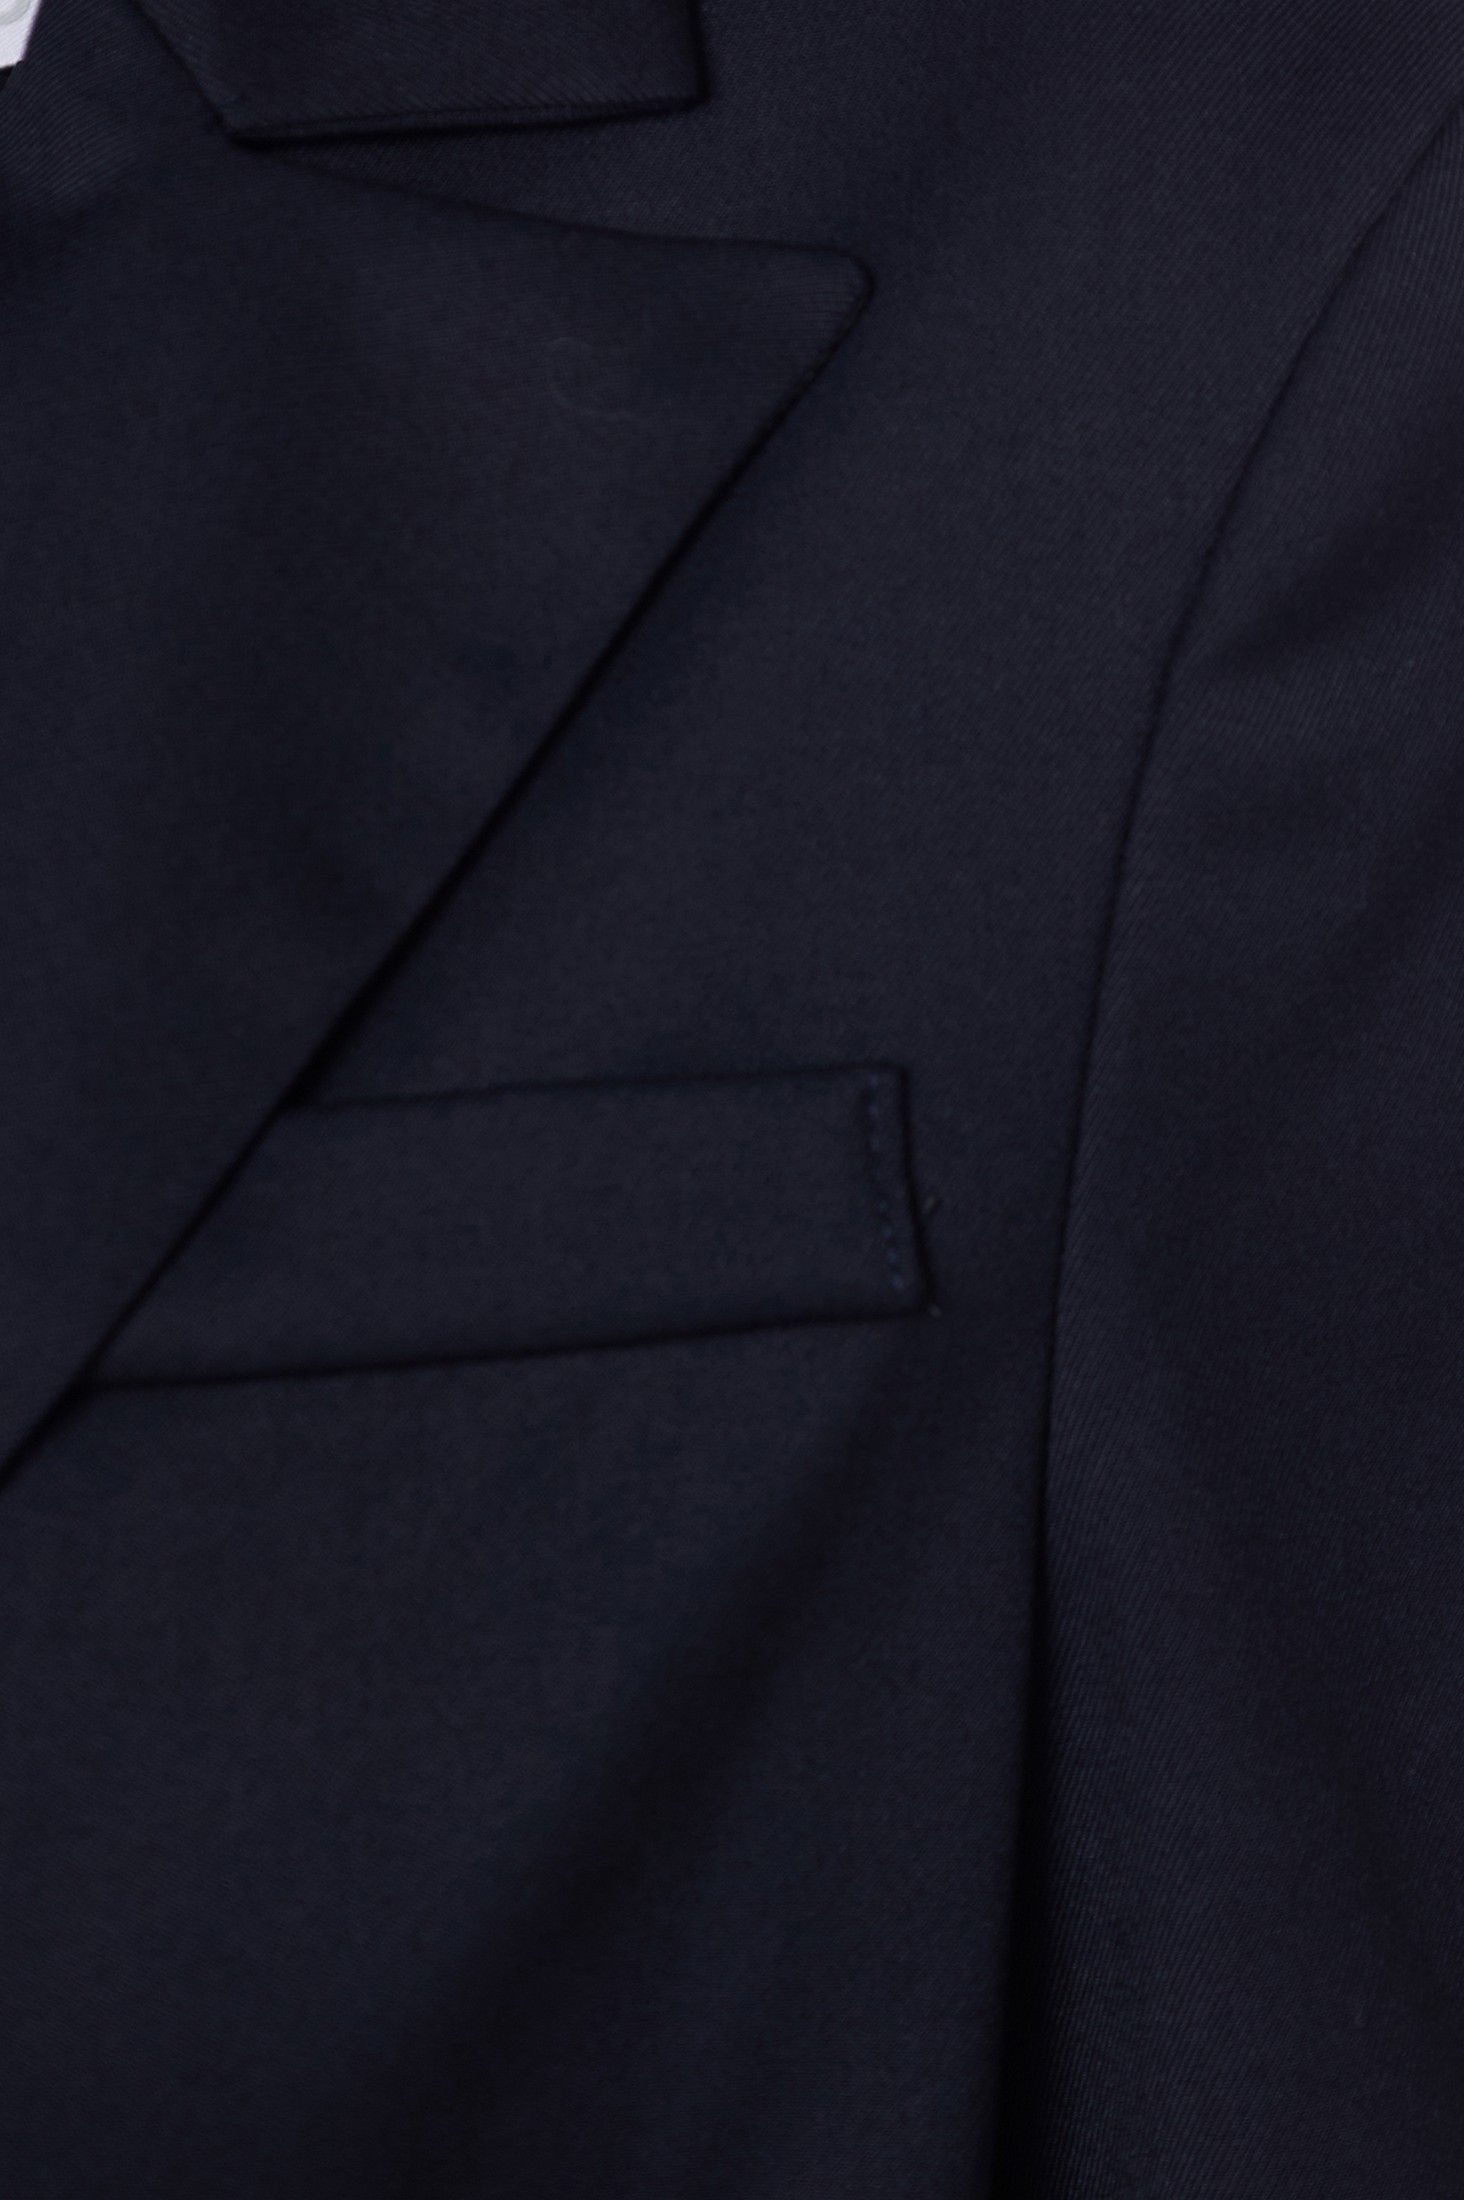 Tailored blazer navy blue ' - ' ΣΑΚΑΚΙΑ